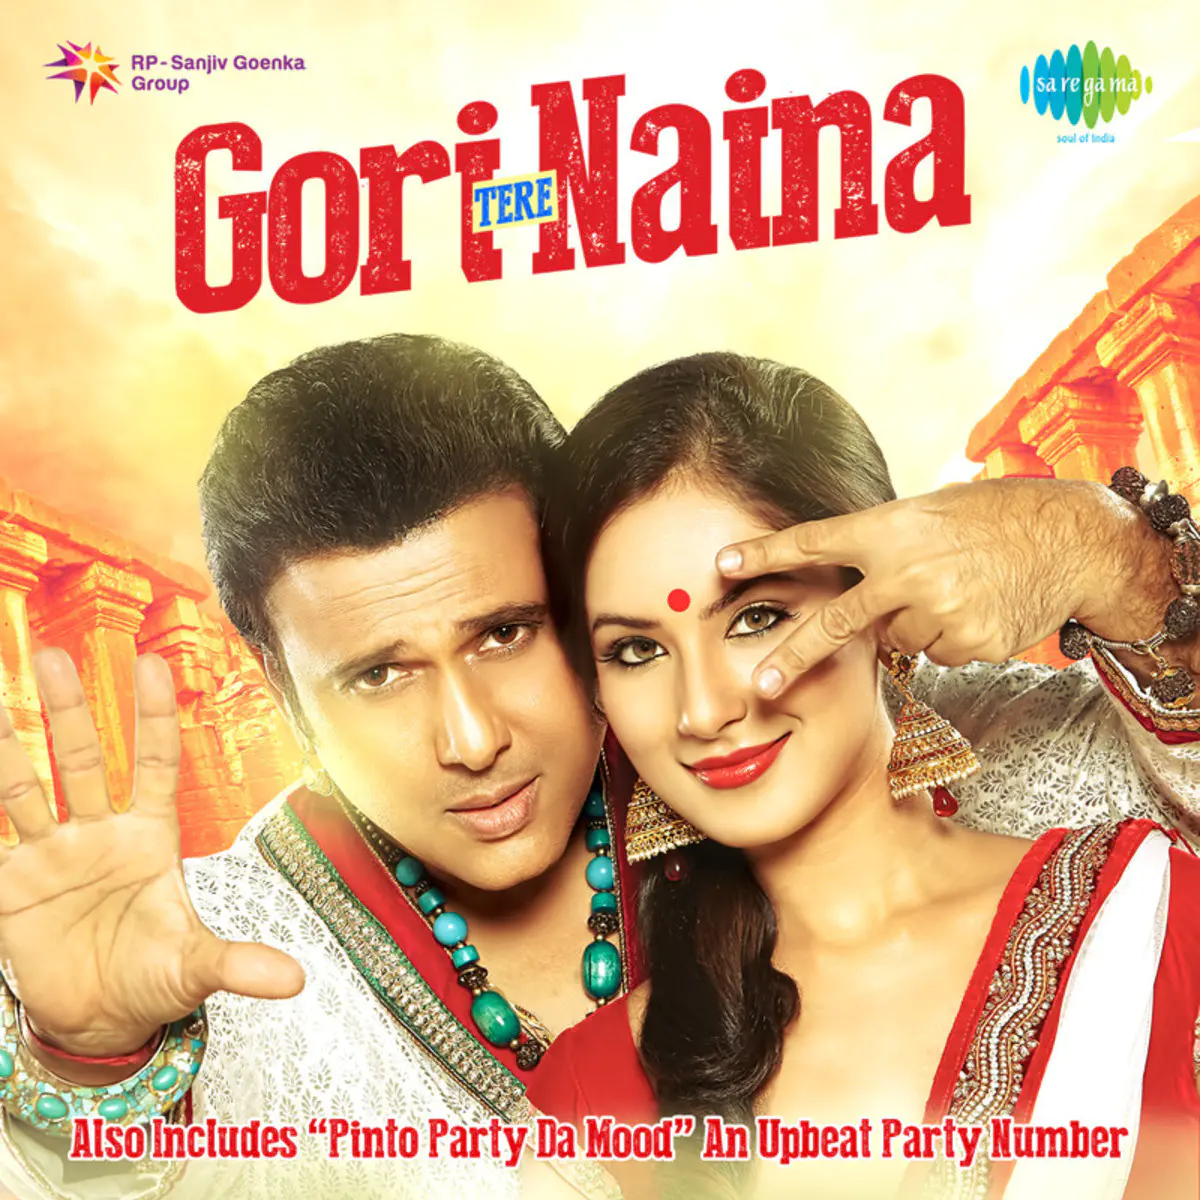 Why Govinda Lyrics In Hindi Gori Tere Naina Why Govinda Song Lyrics In English Free Online On Gaana Com Agar koi number ap ko tang karta hai. gaana